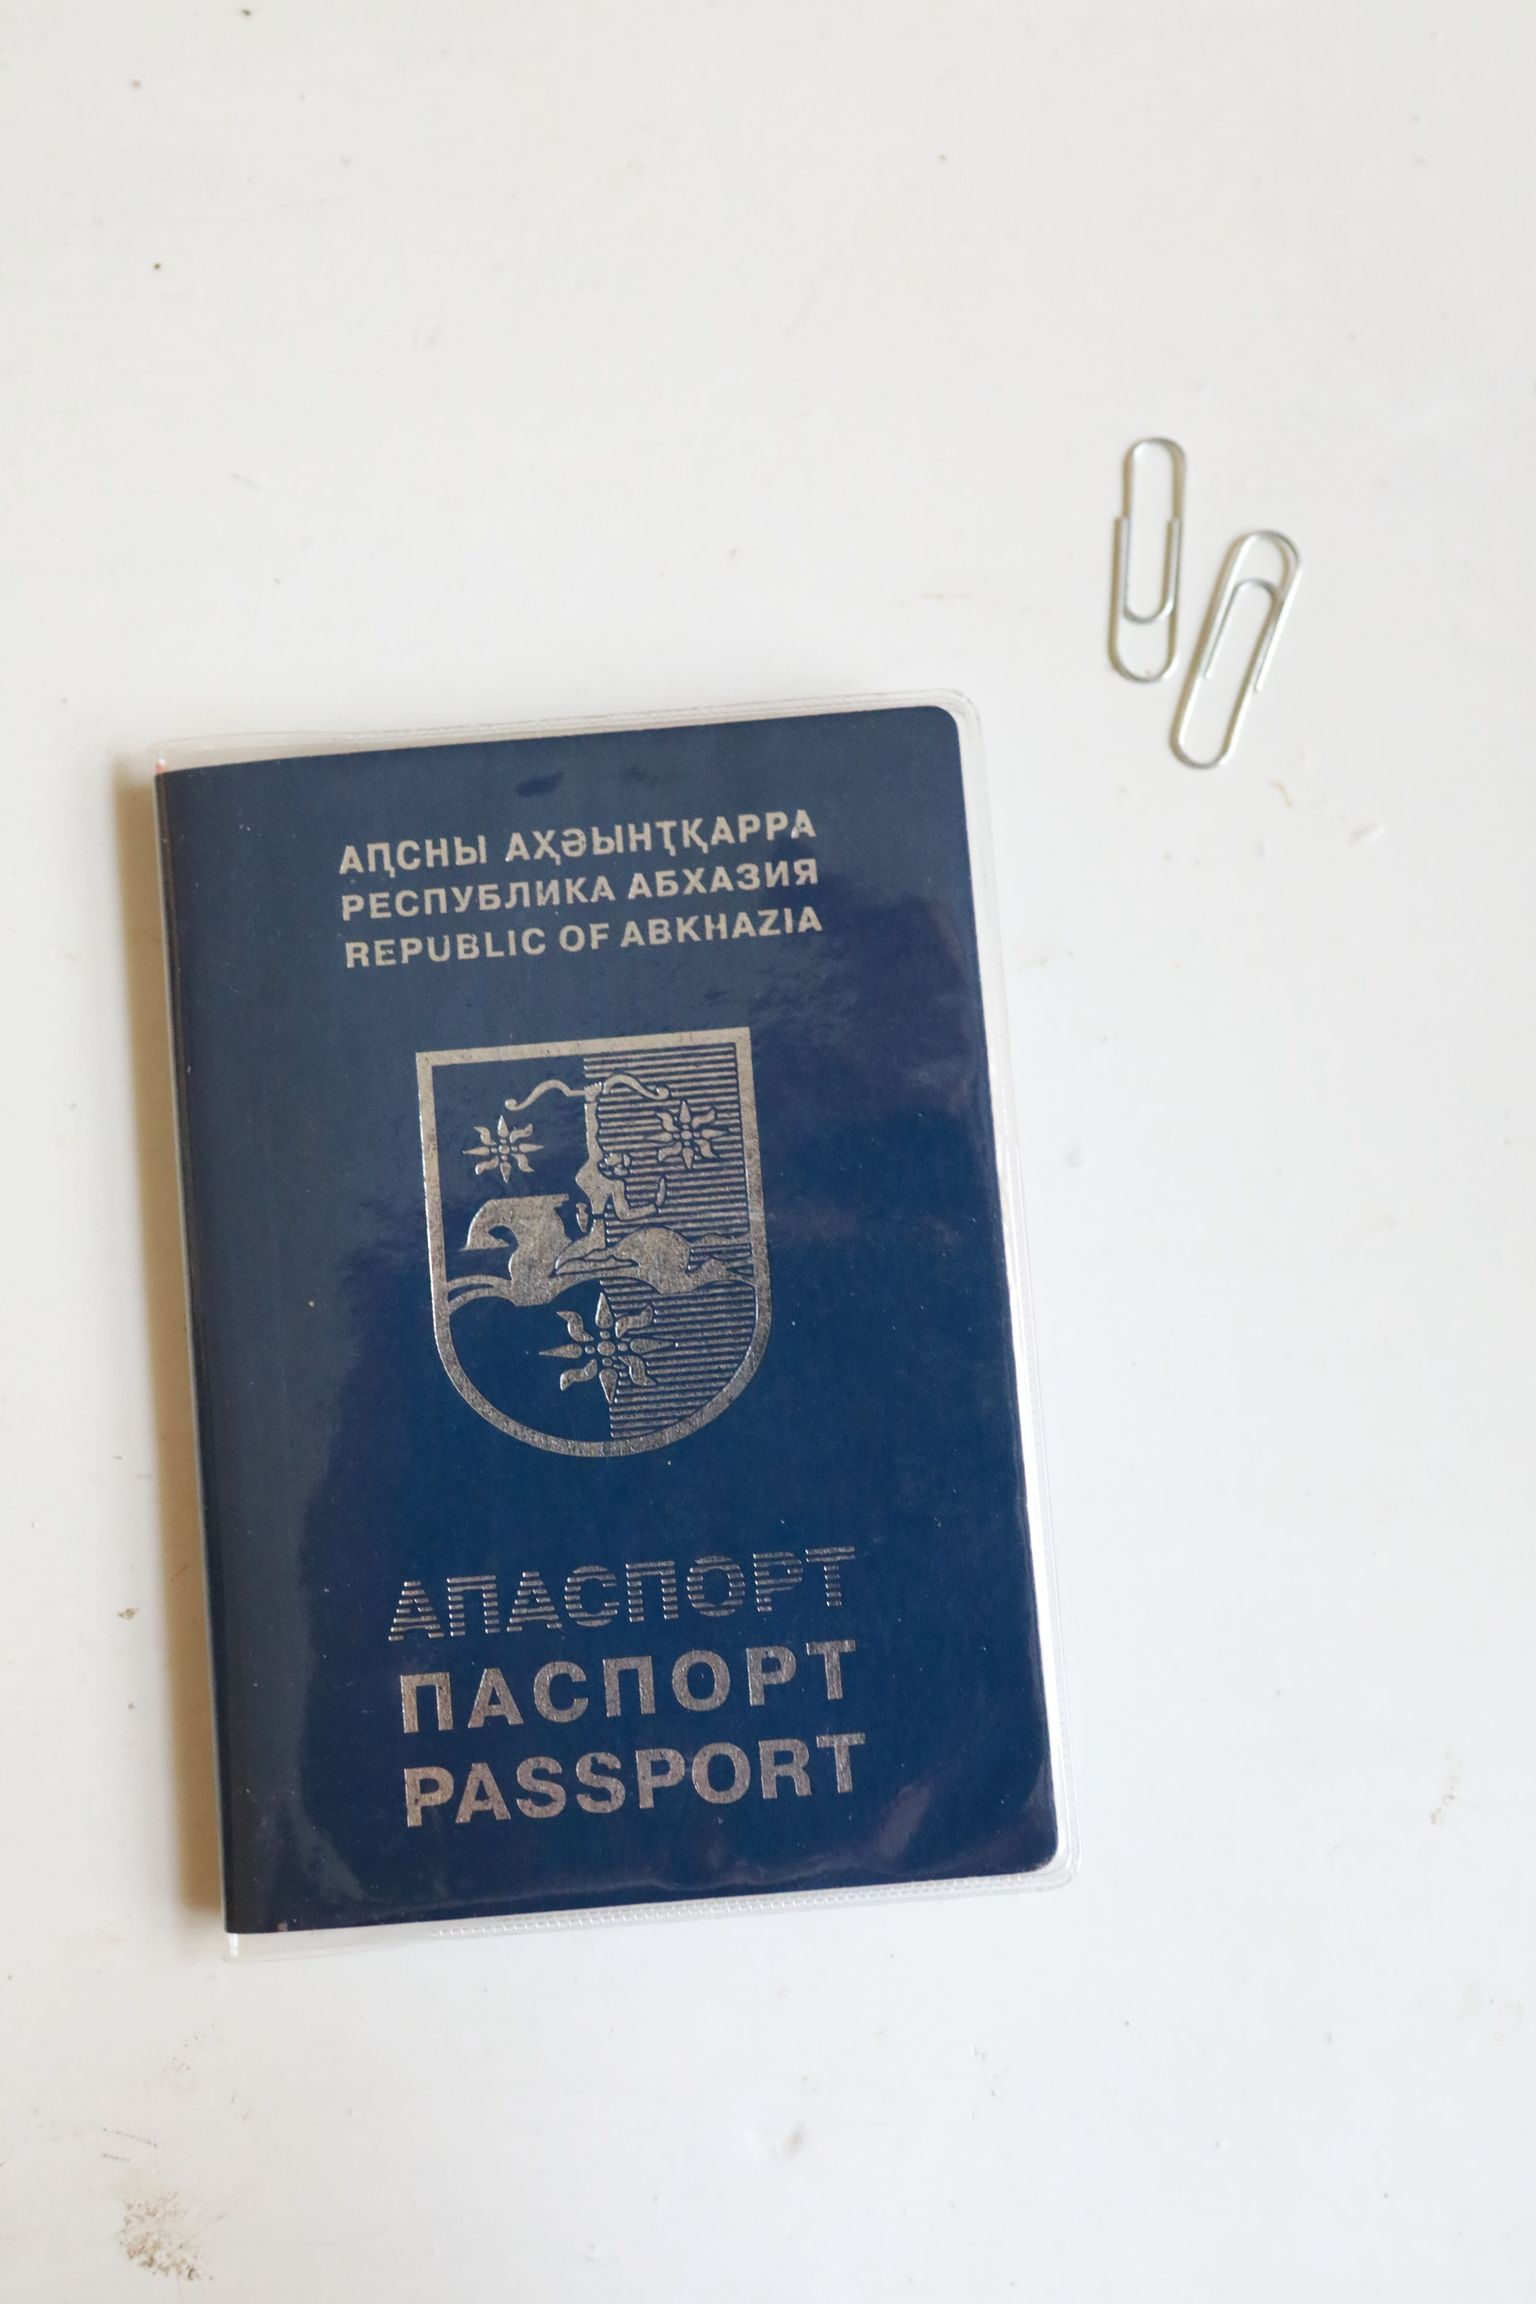 Euroopa Liidu riigid, sh Eesti ei tunnista Abhaasia passi, sest ei tunnista Abhaasia riiki.